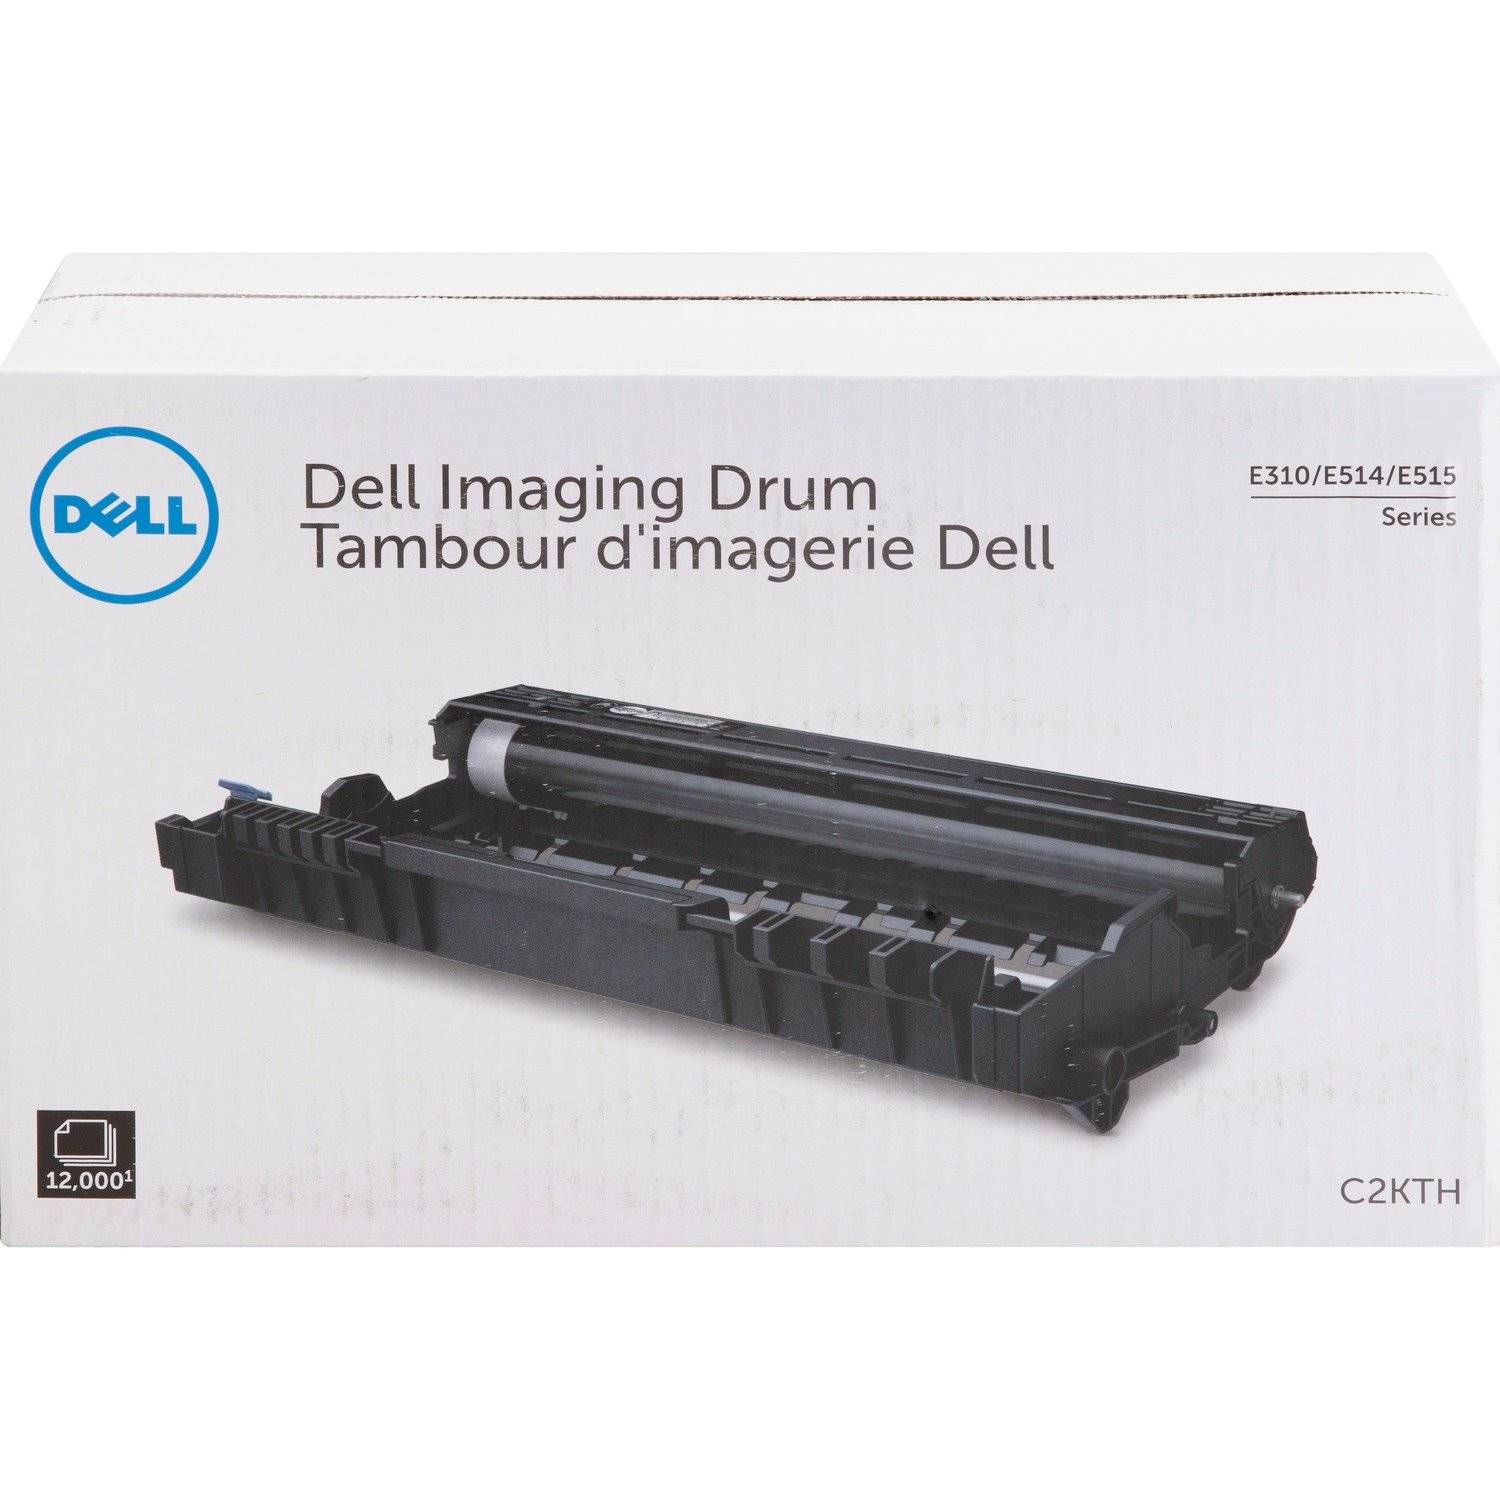 Dell Imaging Drum